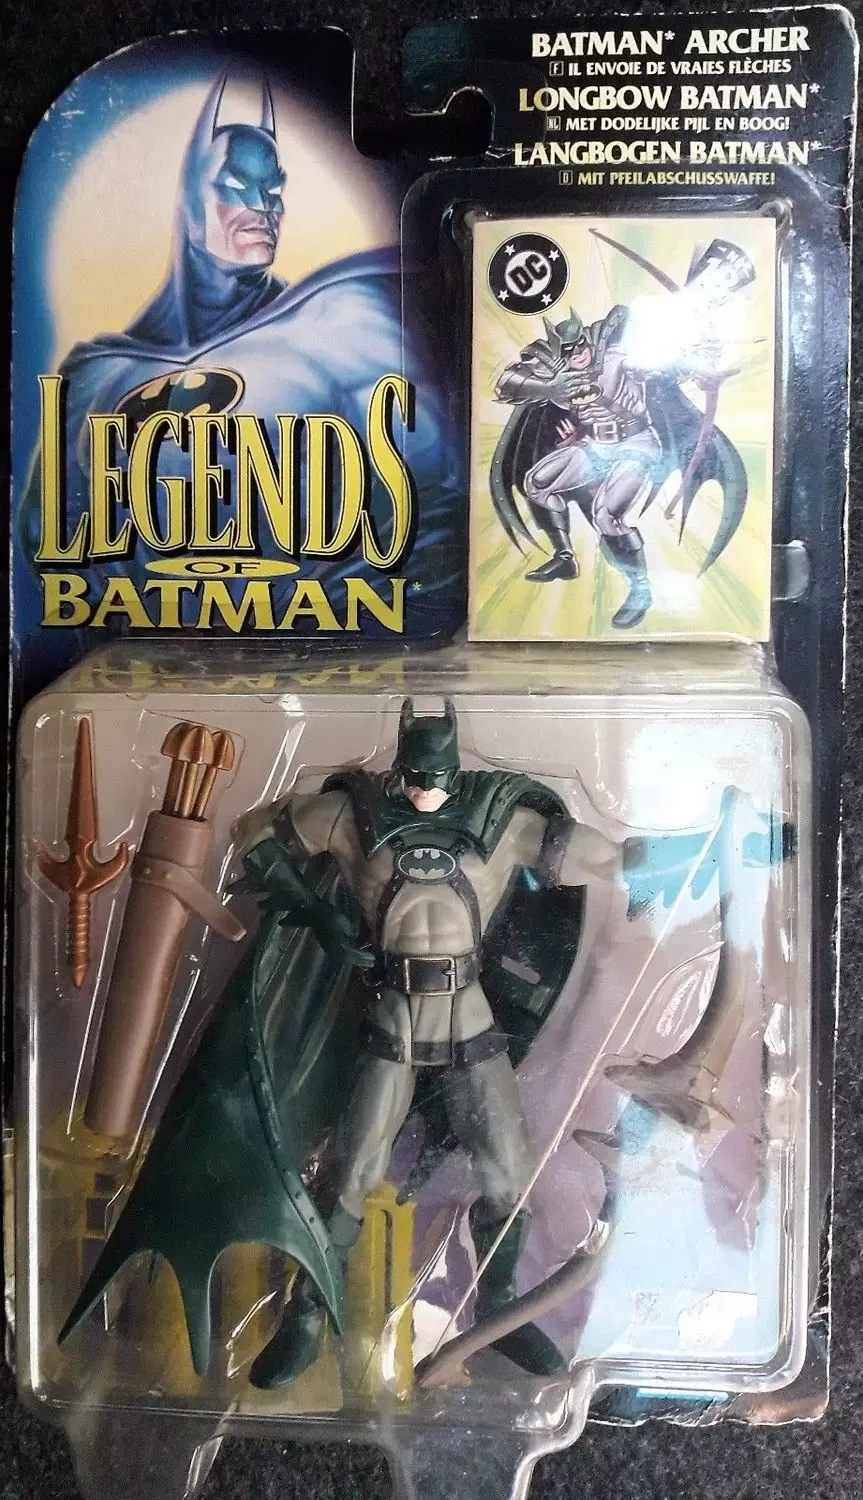 Legends of Batman - Longbow Batman